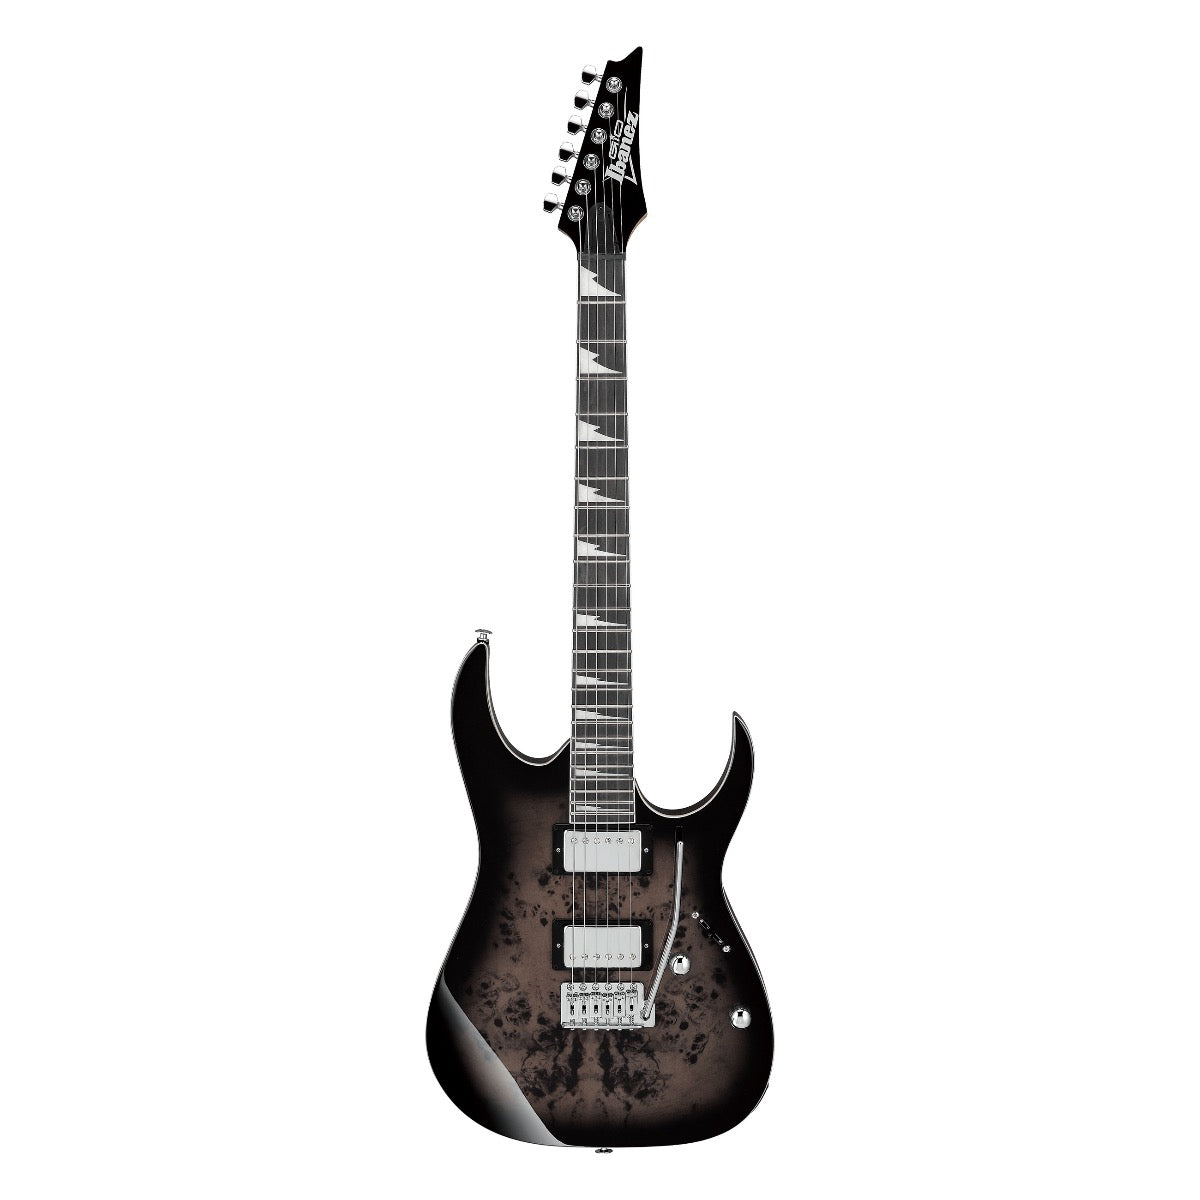 Ibanez GRG220PA1 Electric Guitar - Transparent Brown Black Burst, View 2